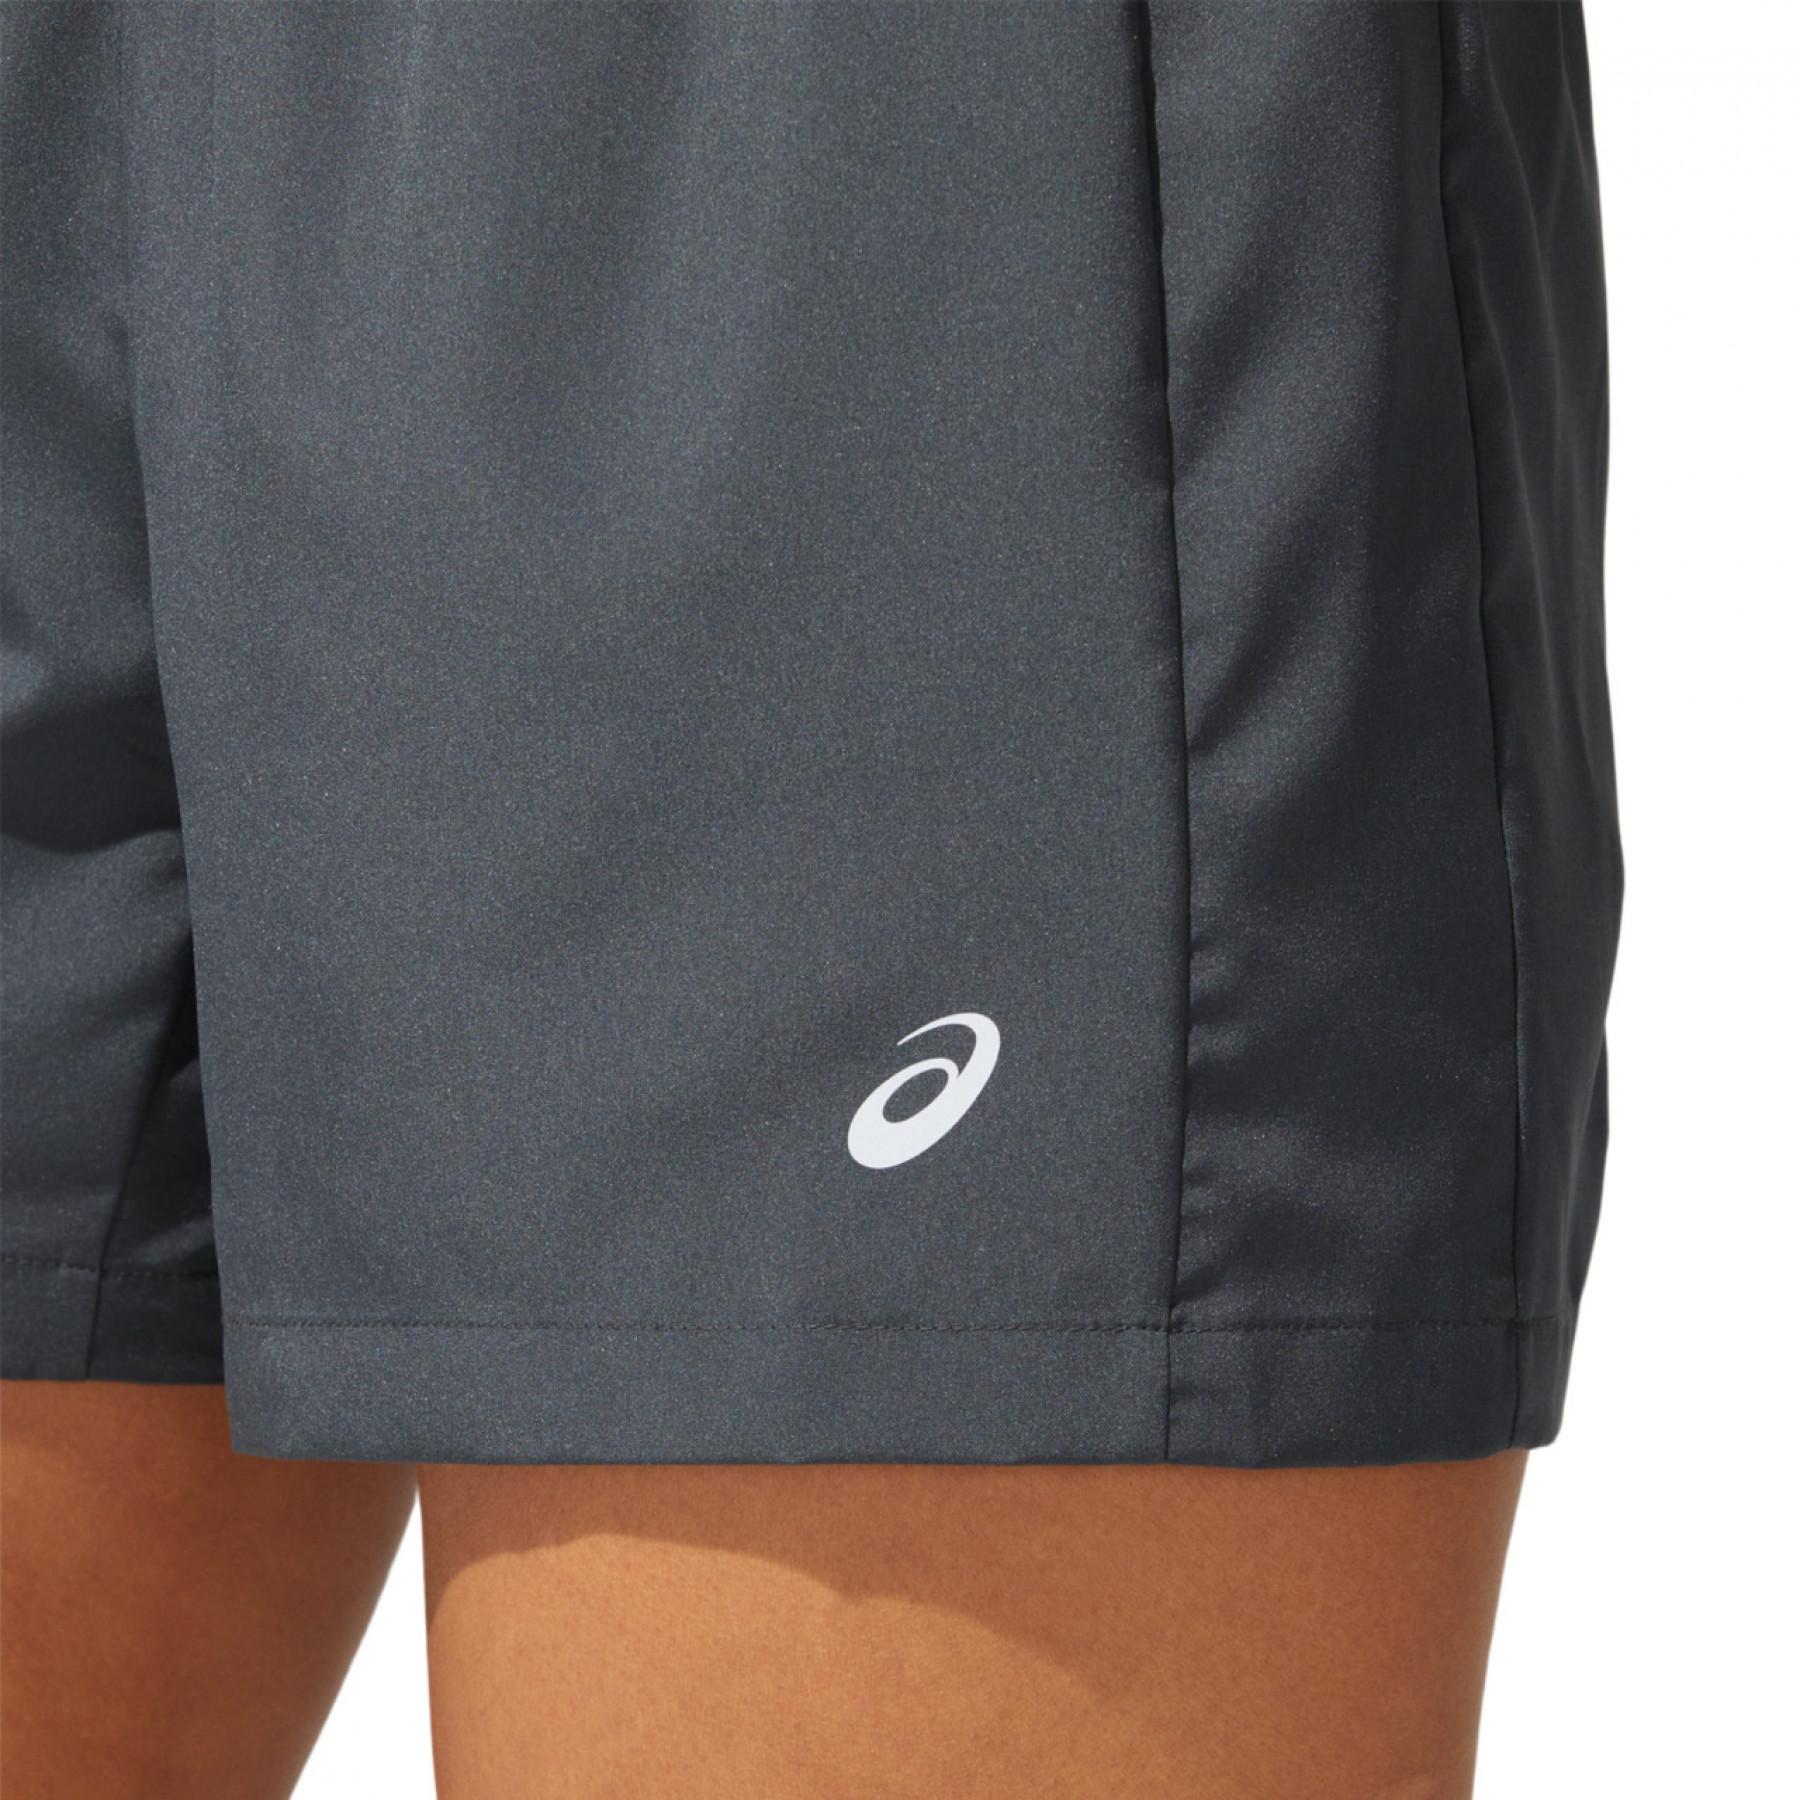 Women's shorts Asics Icon 4in